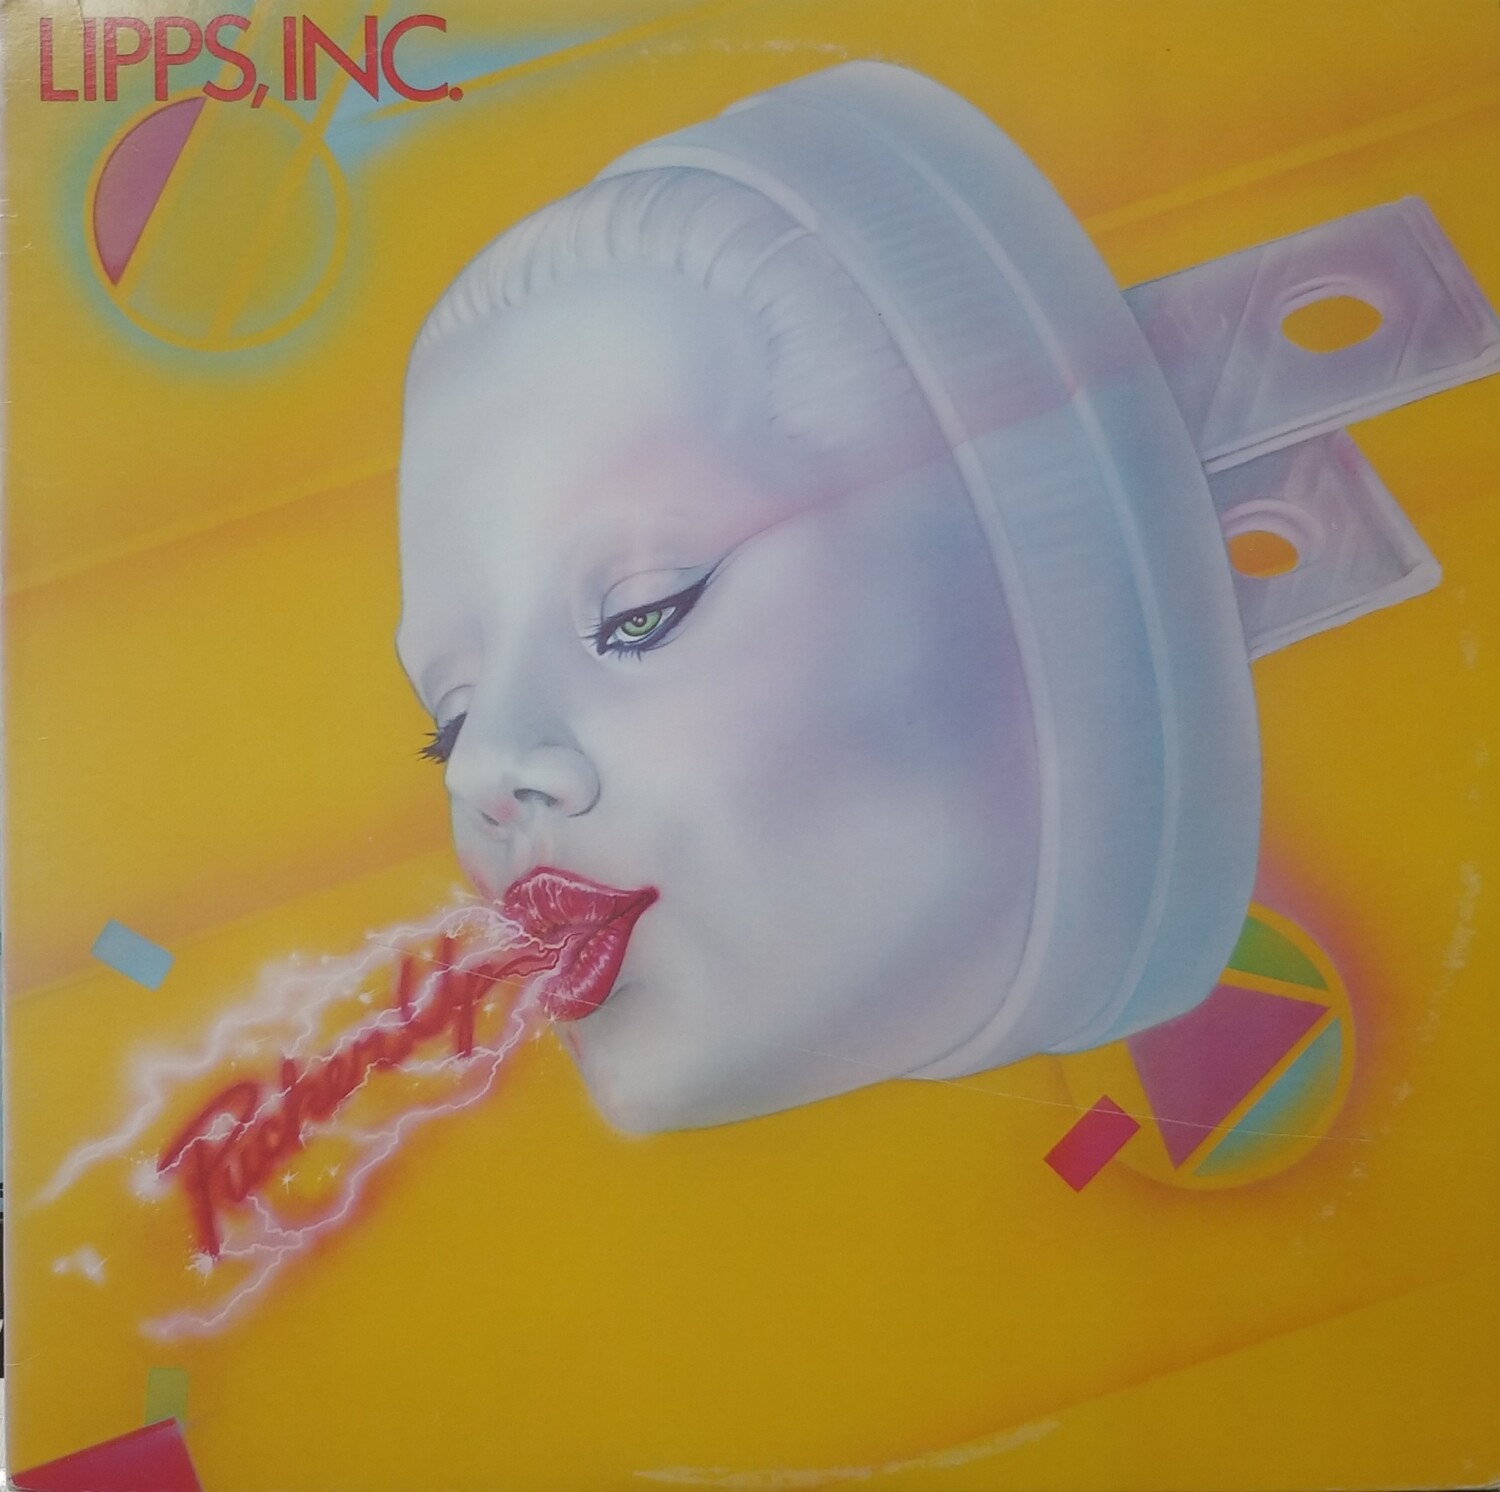 Lipps inc - Pucker up